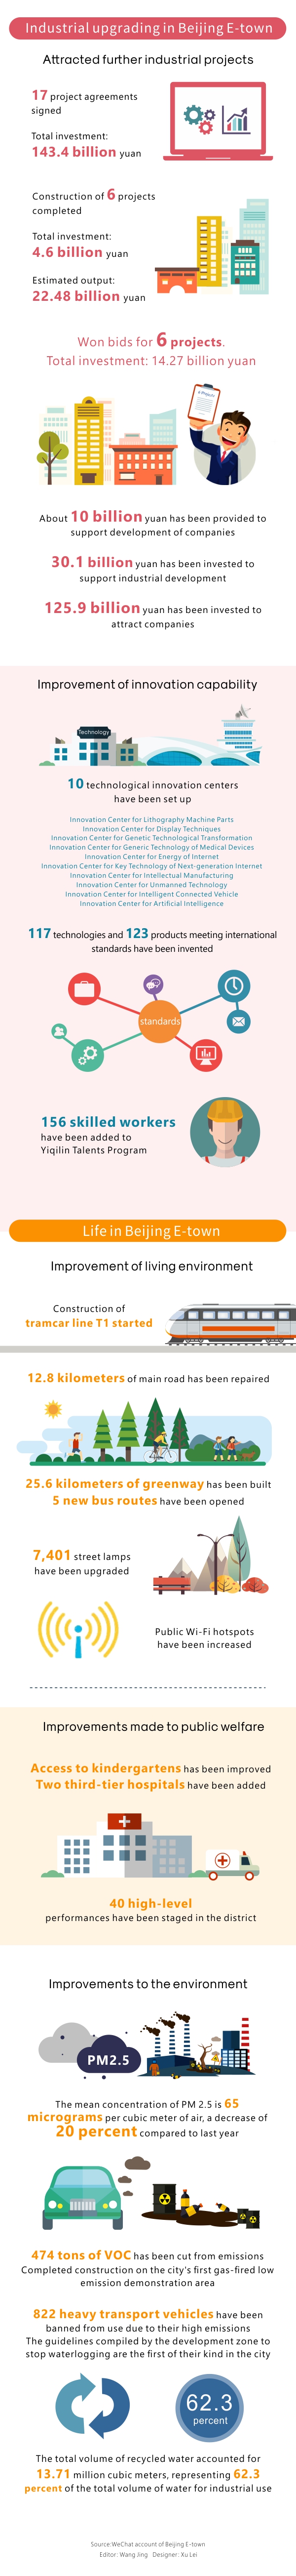 2017 Beijing E-town work report